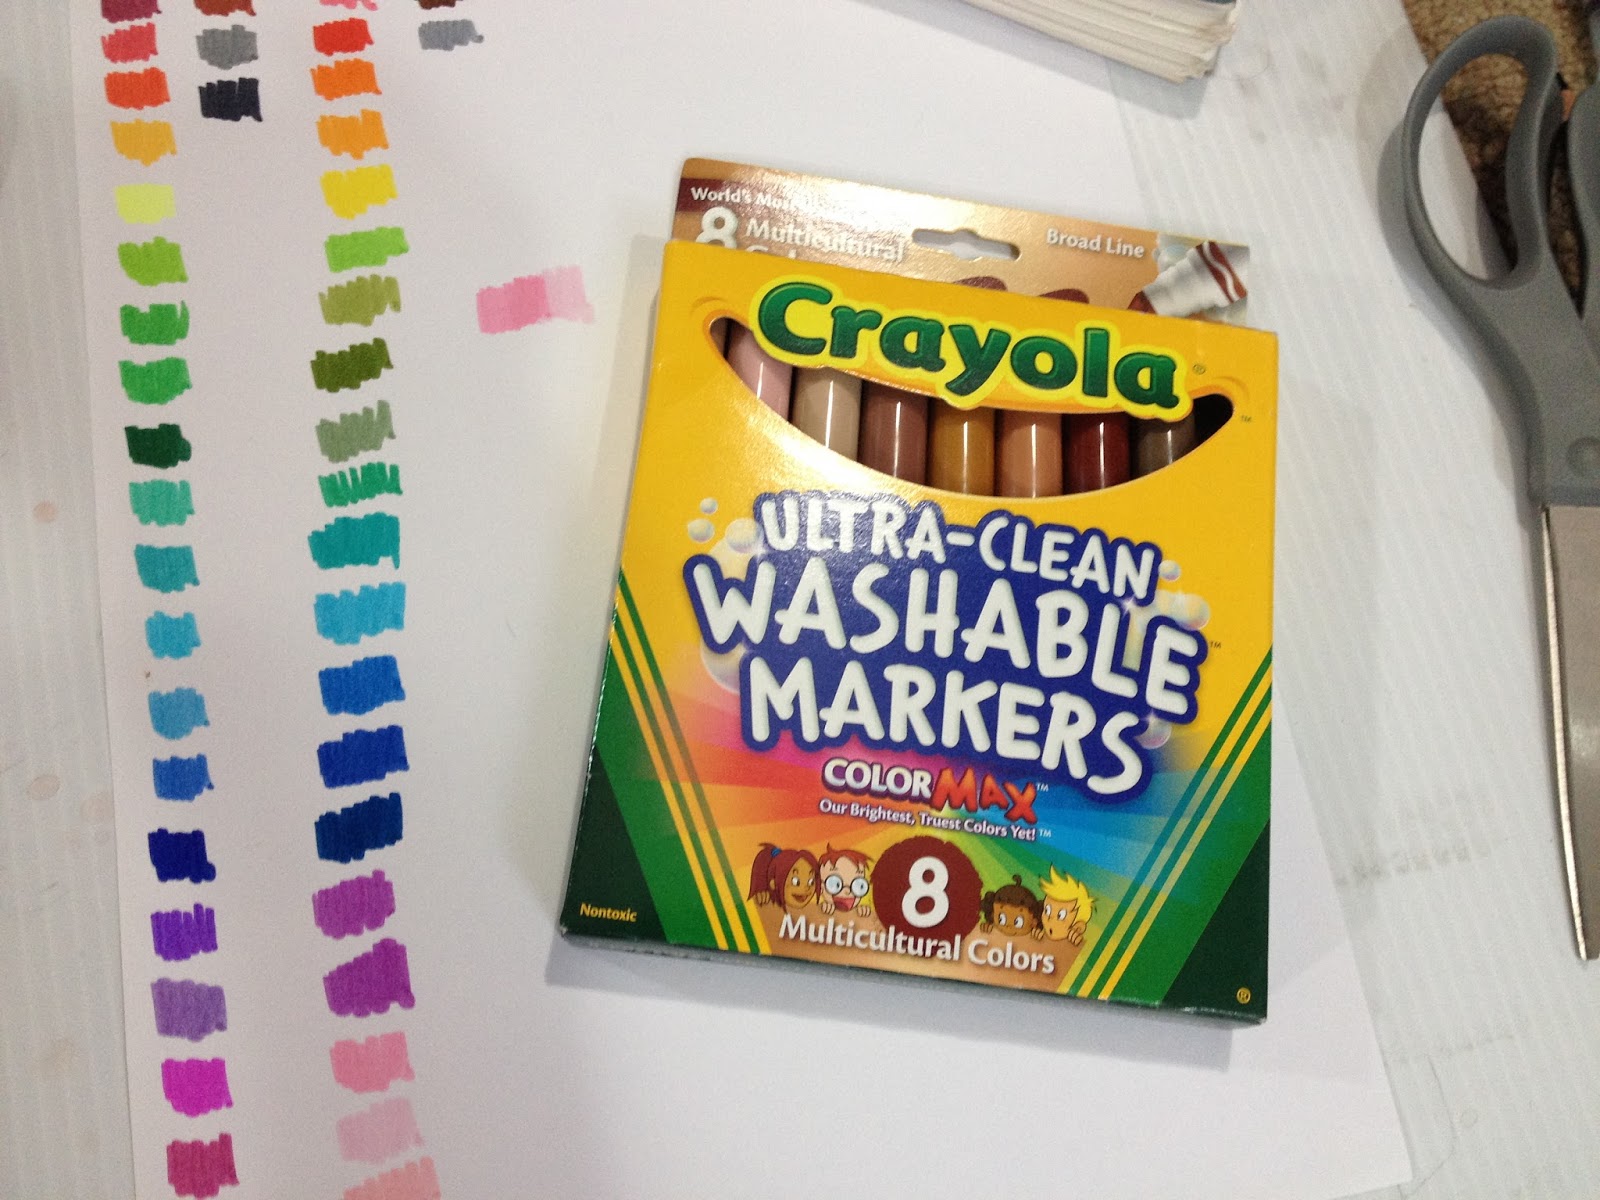 Unboxing Crayola Washable Project Paints 